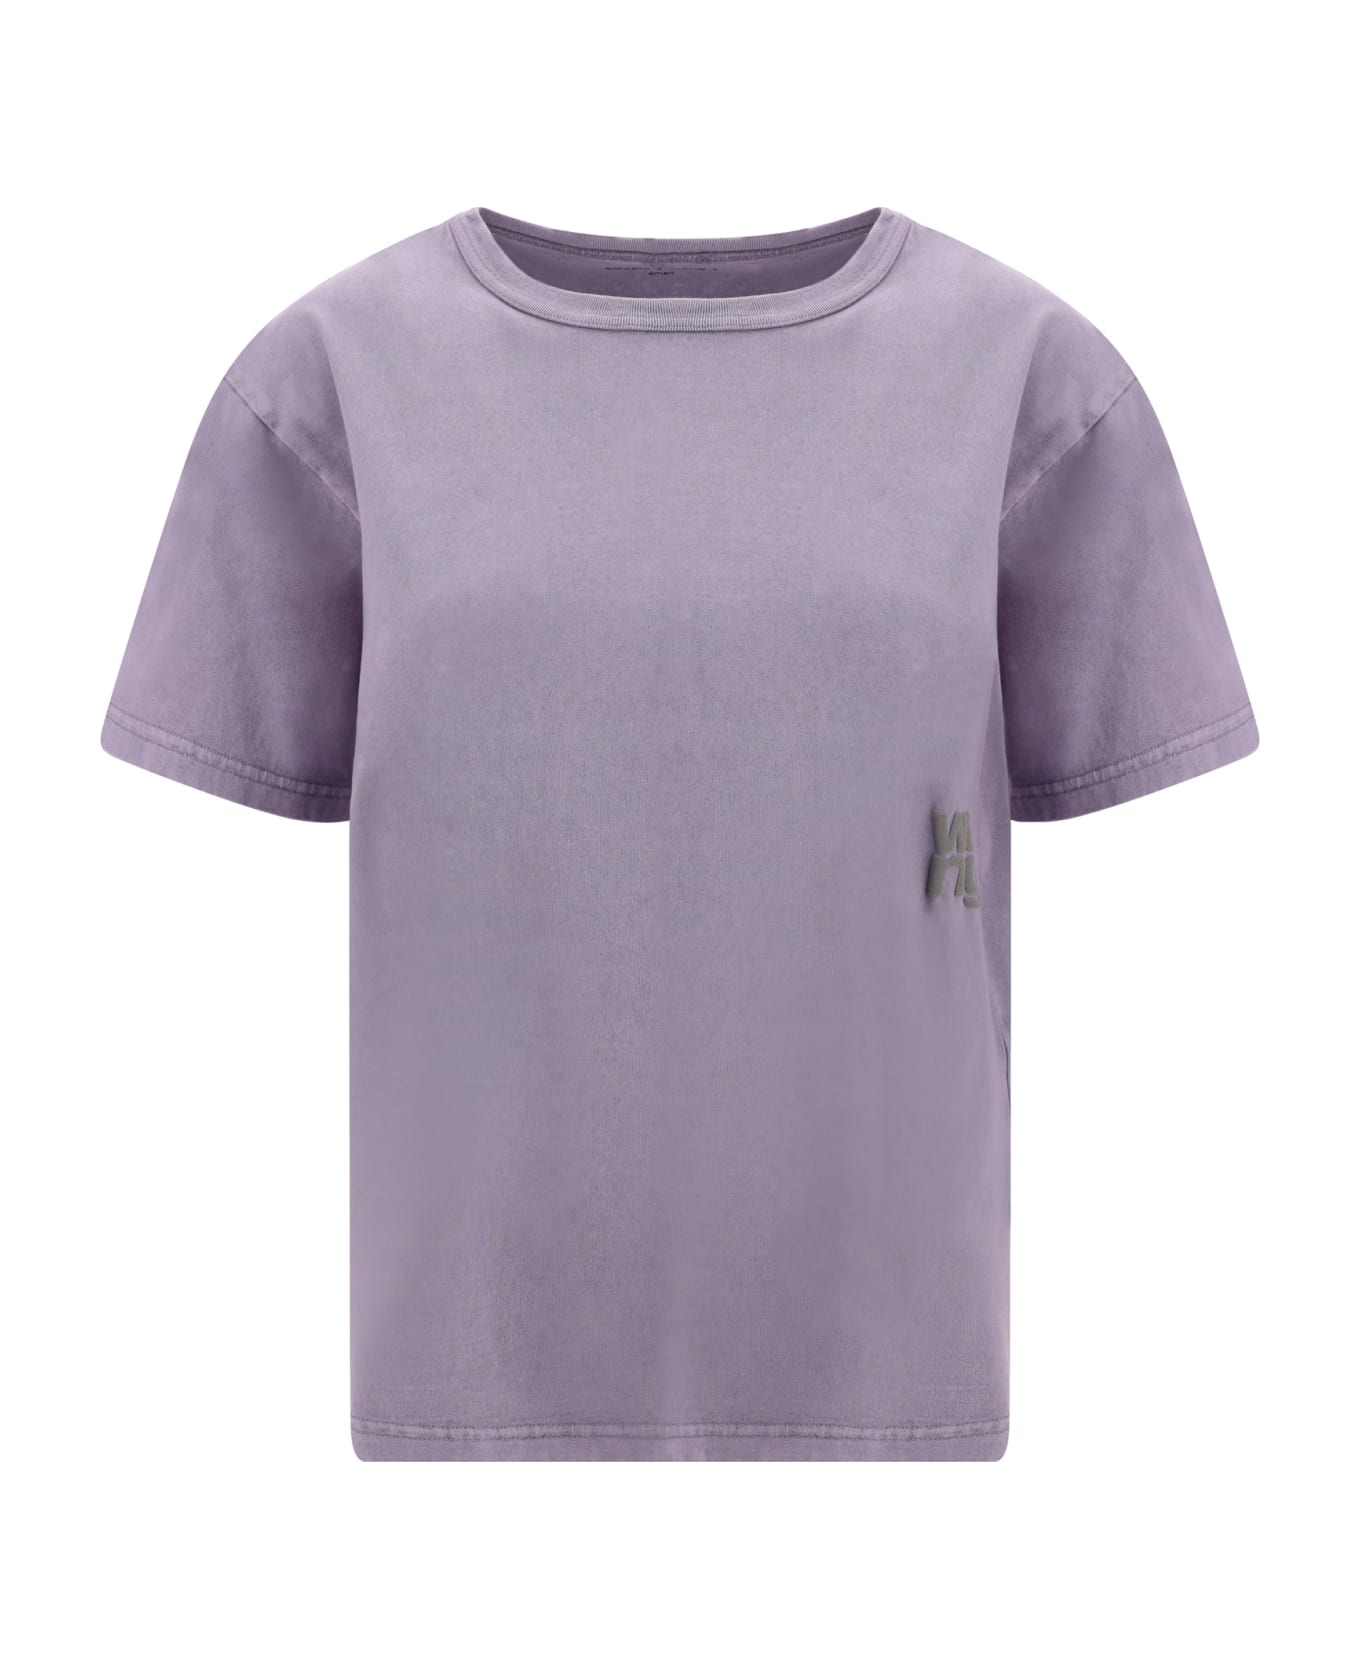 Alexander Wang Essential T-shirt - Acid Pink Lavender